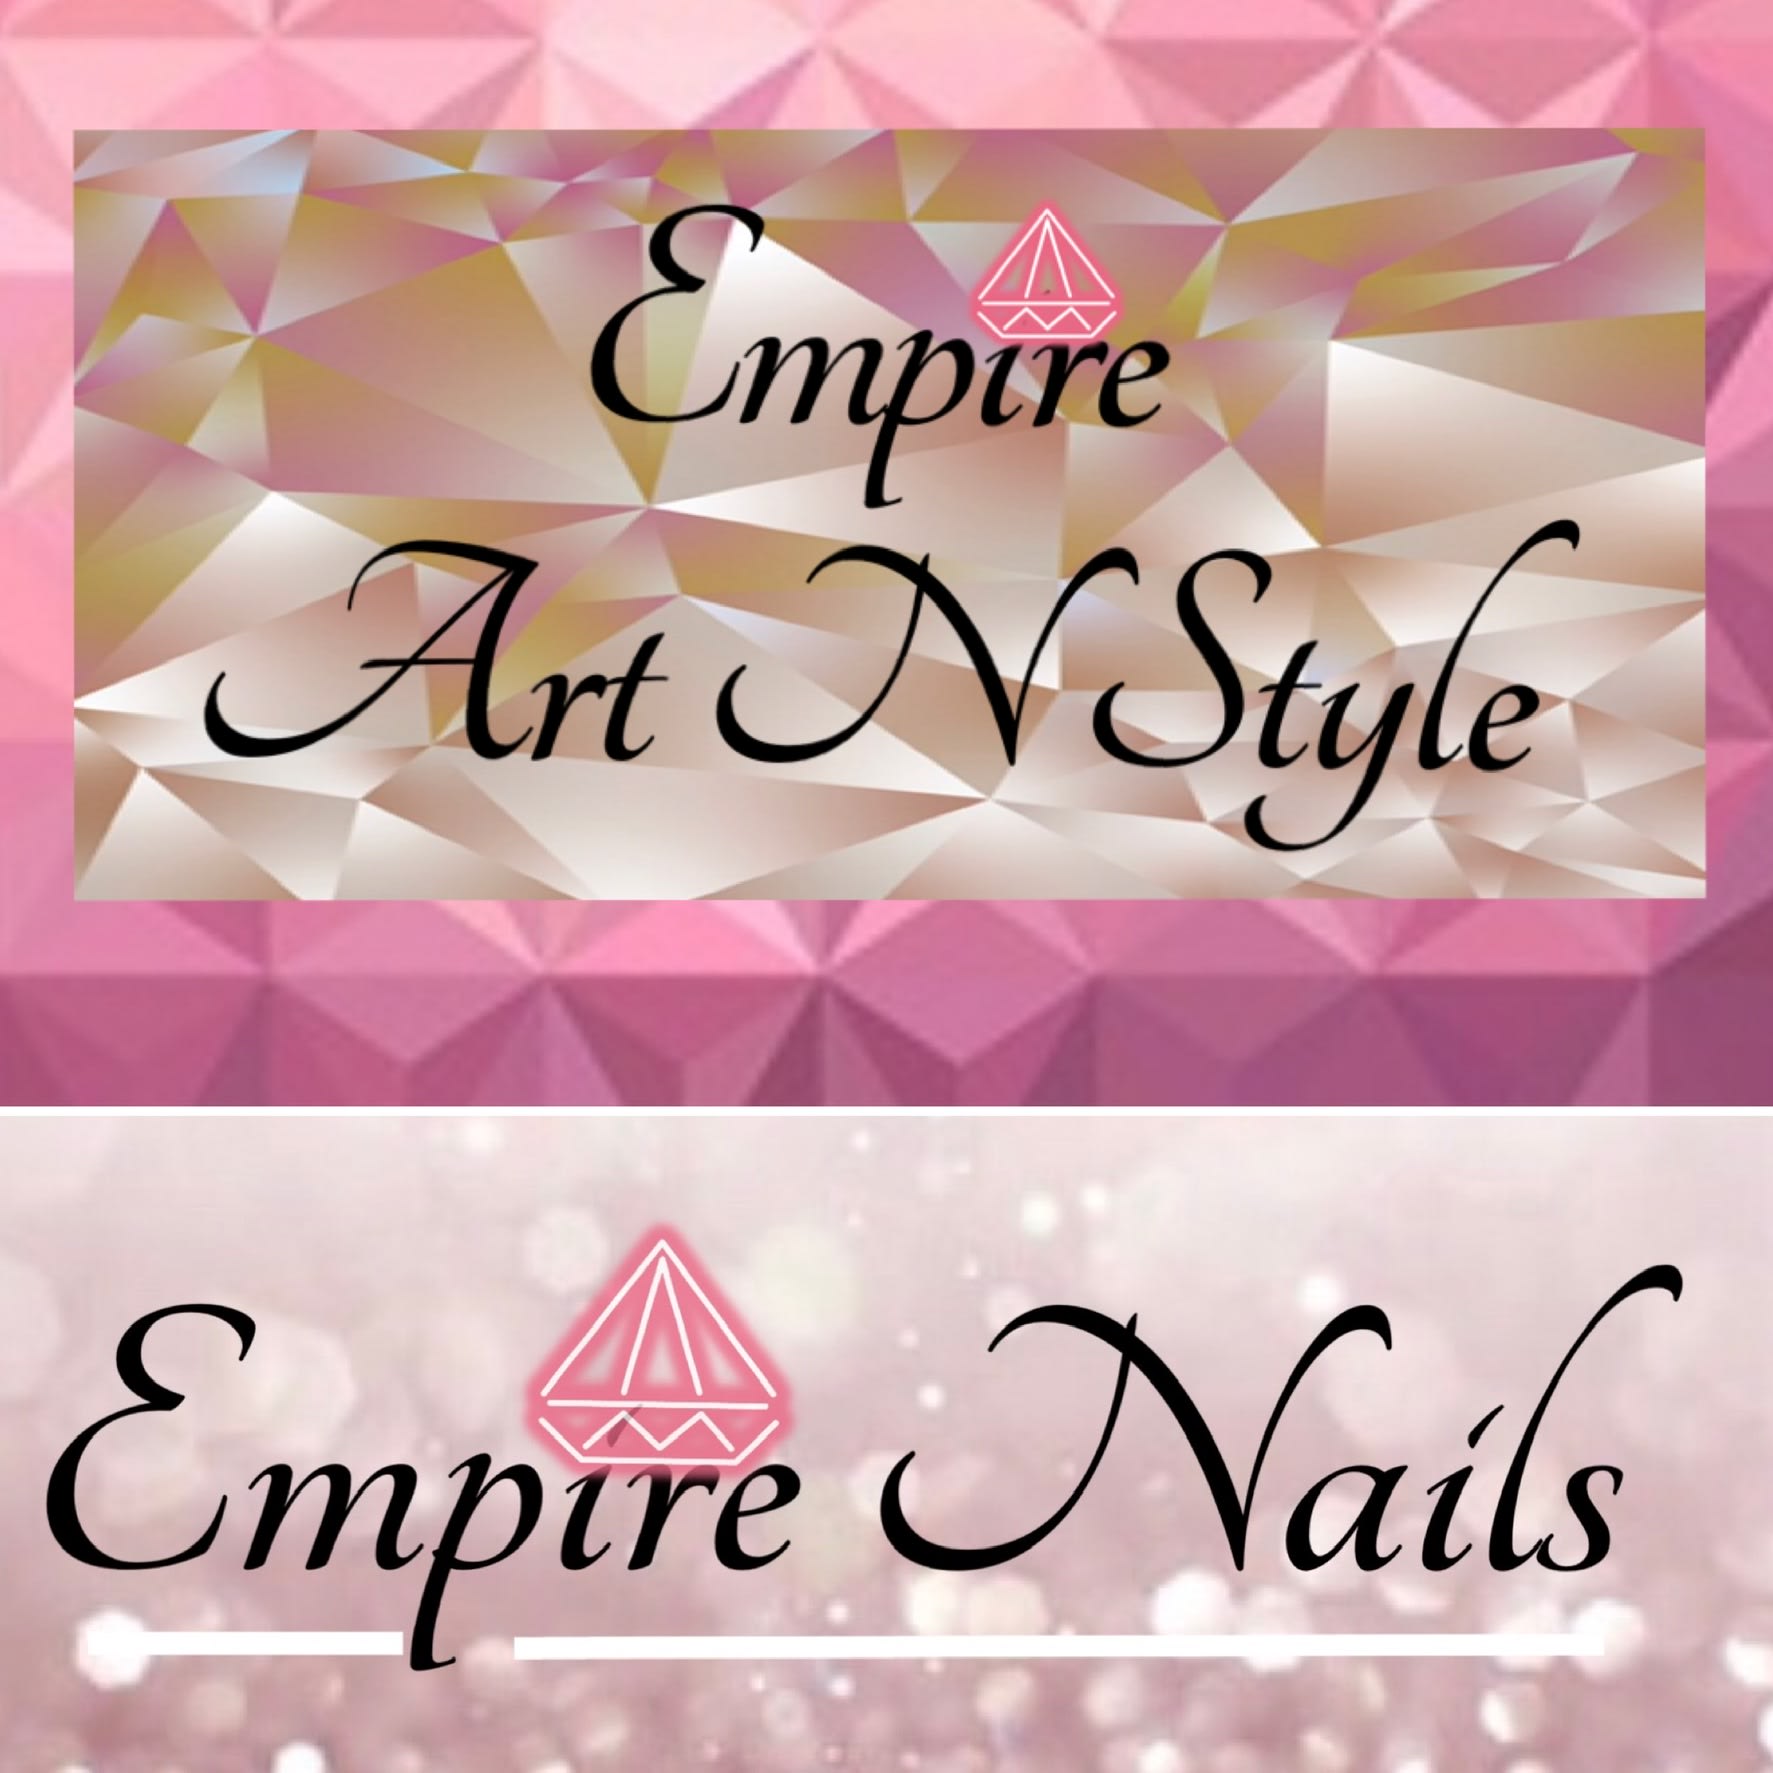 Empire_💎💅artNstyle💎💅_&nails